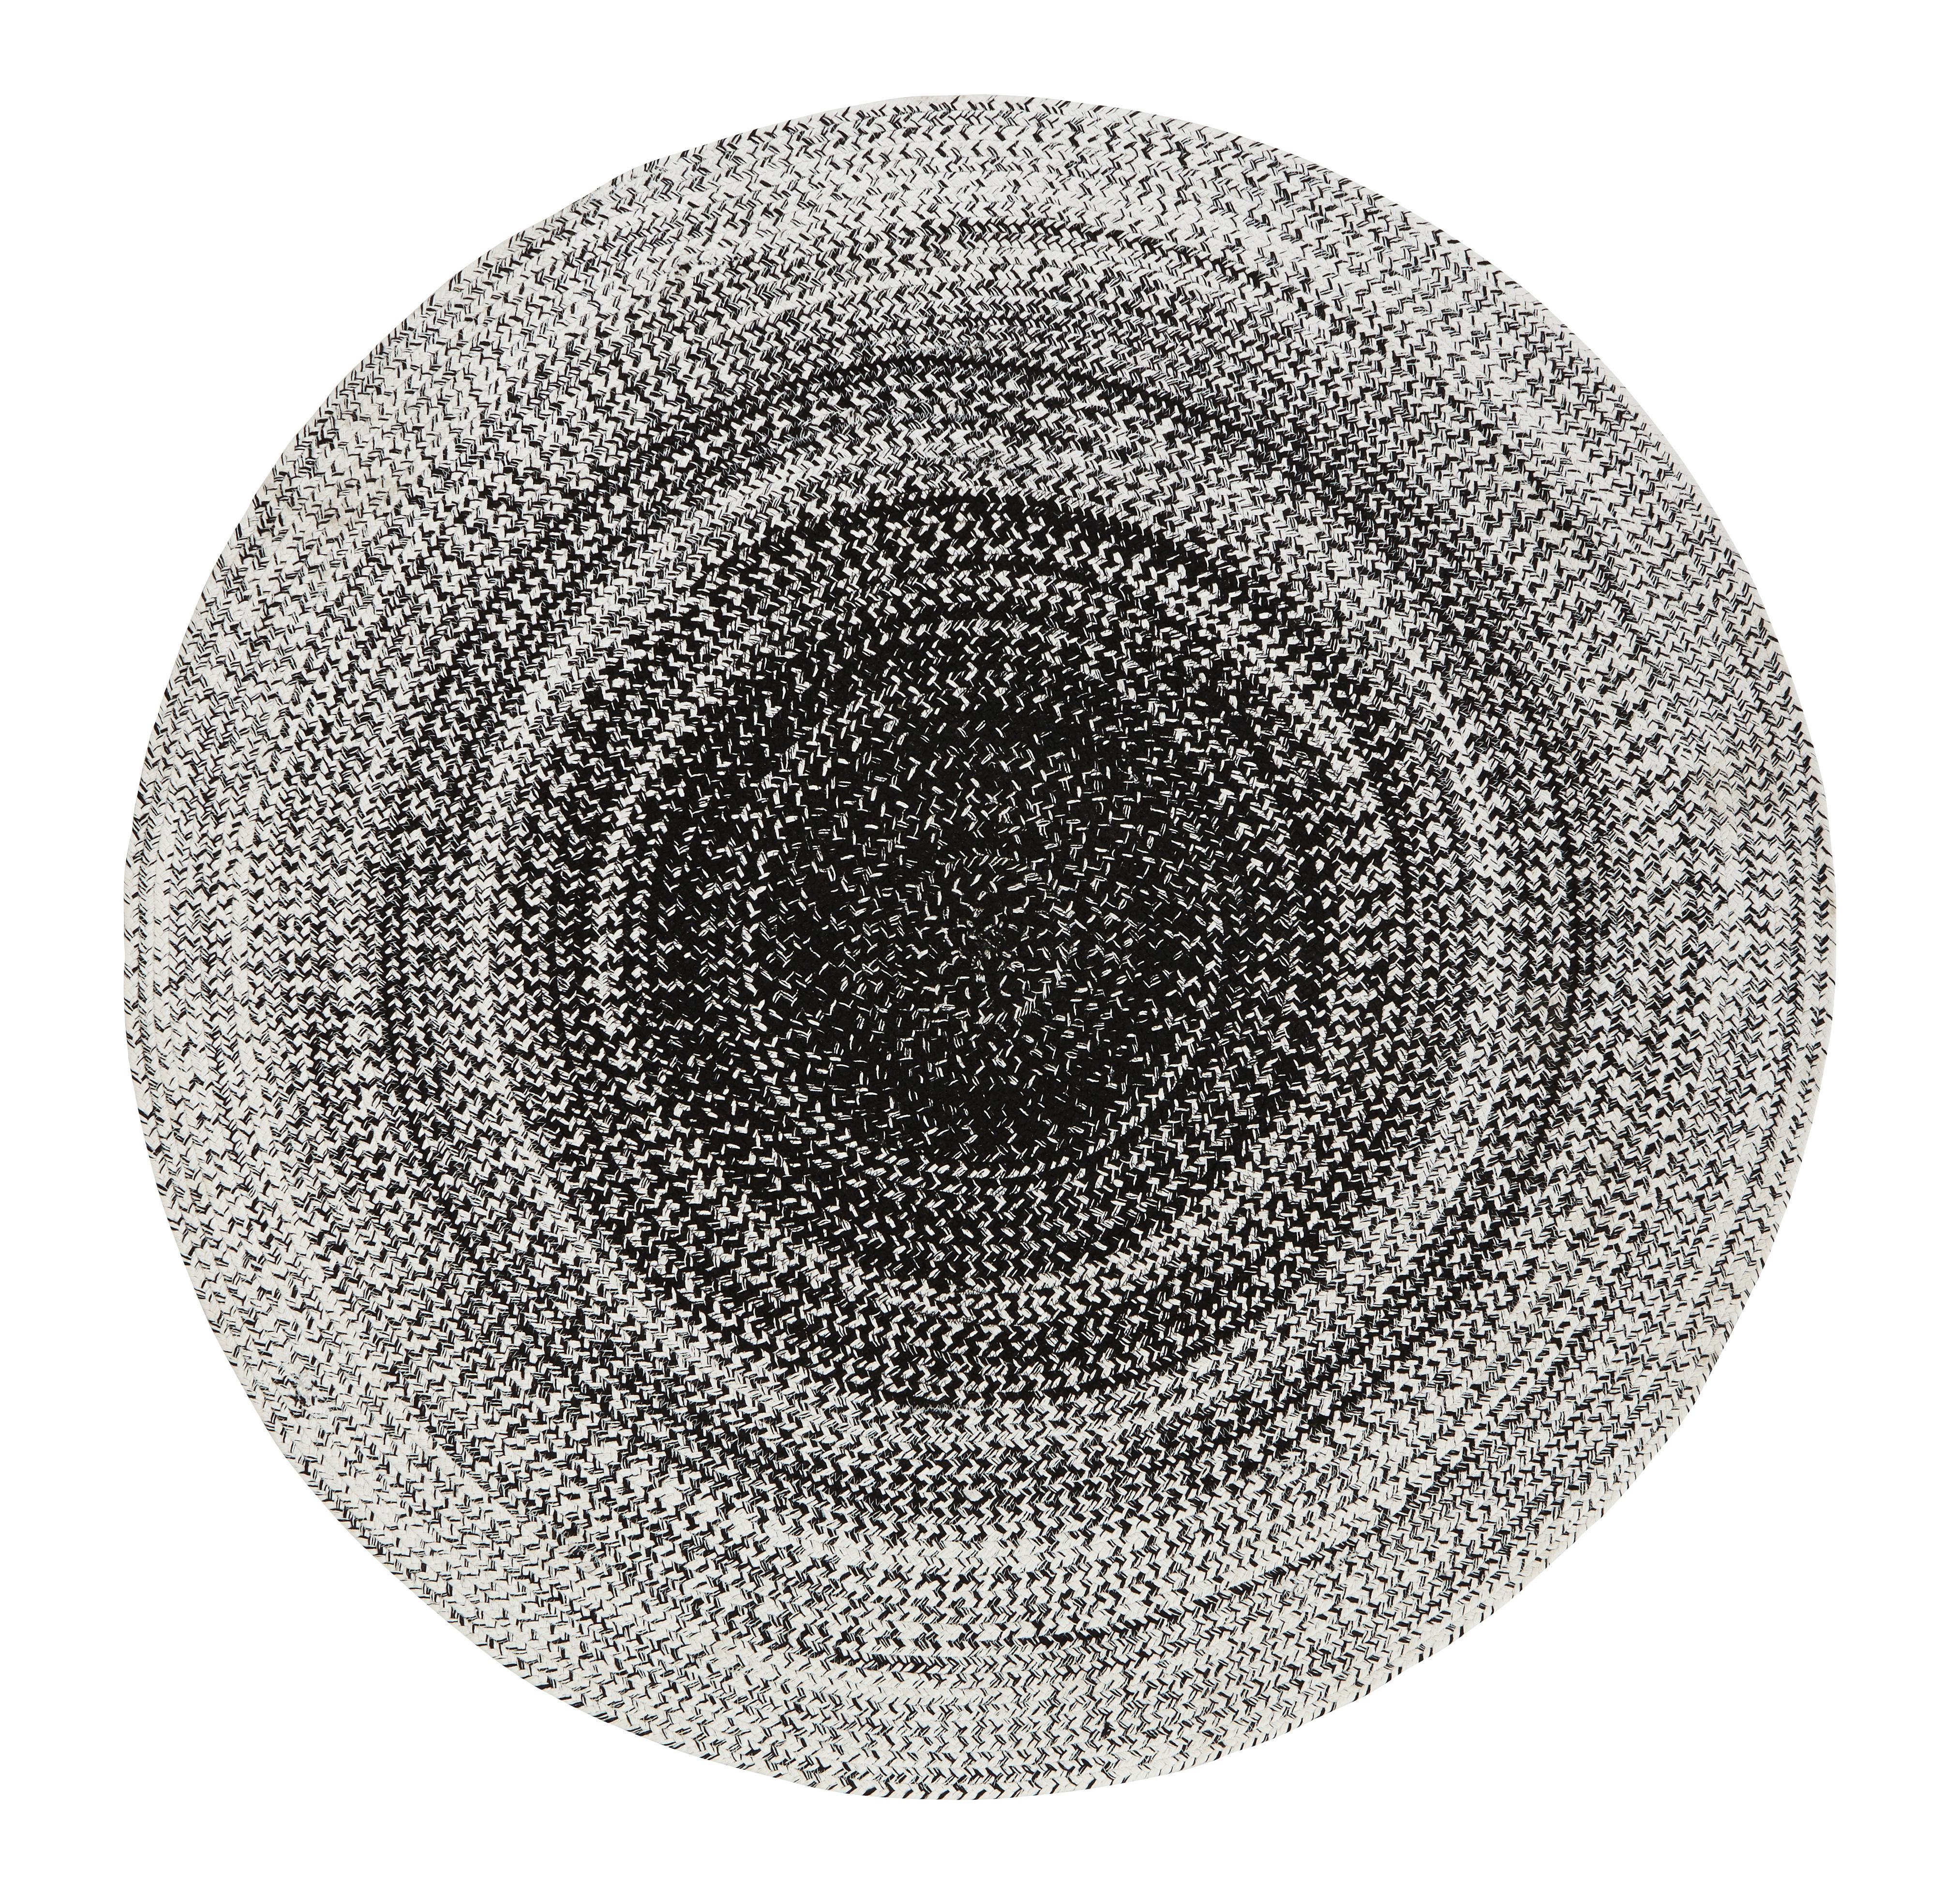 Plocho Tkaný Koberec Marie, 160cm - čierna/biela, textil (160cm) - Modern Living